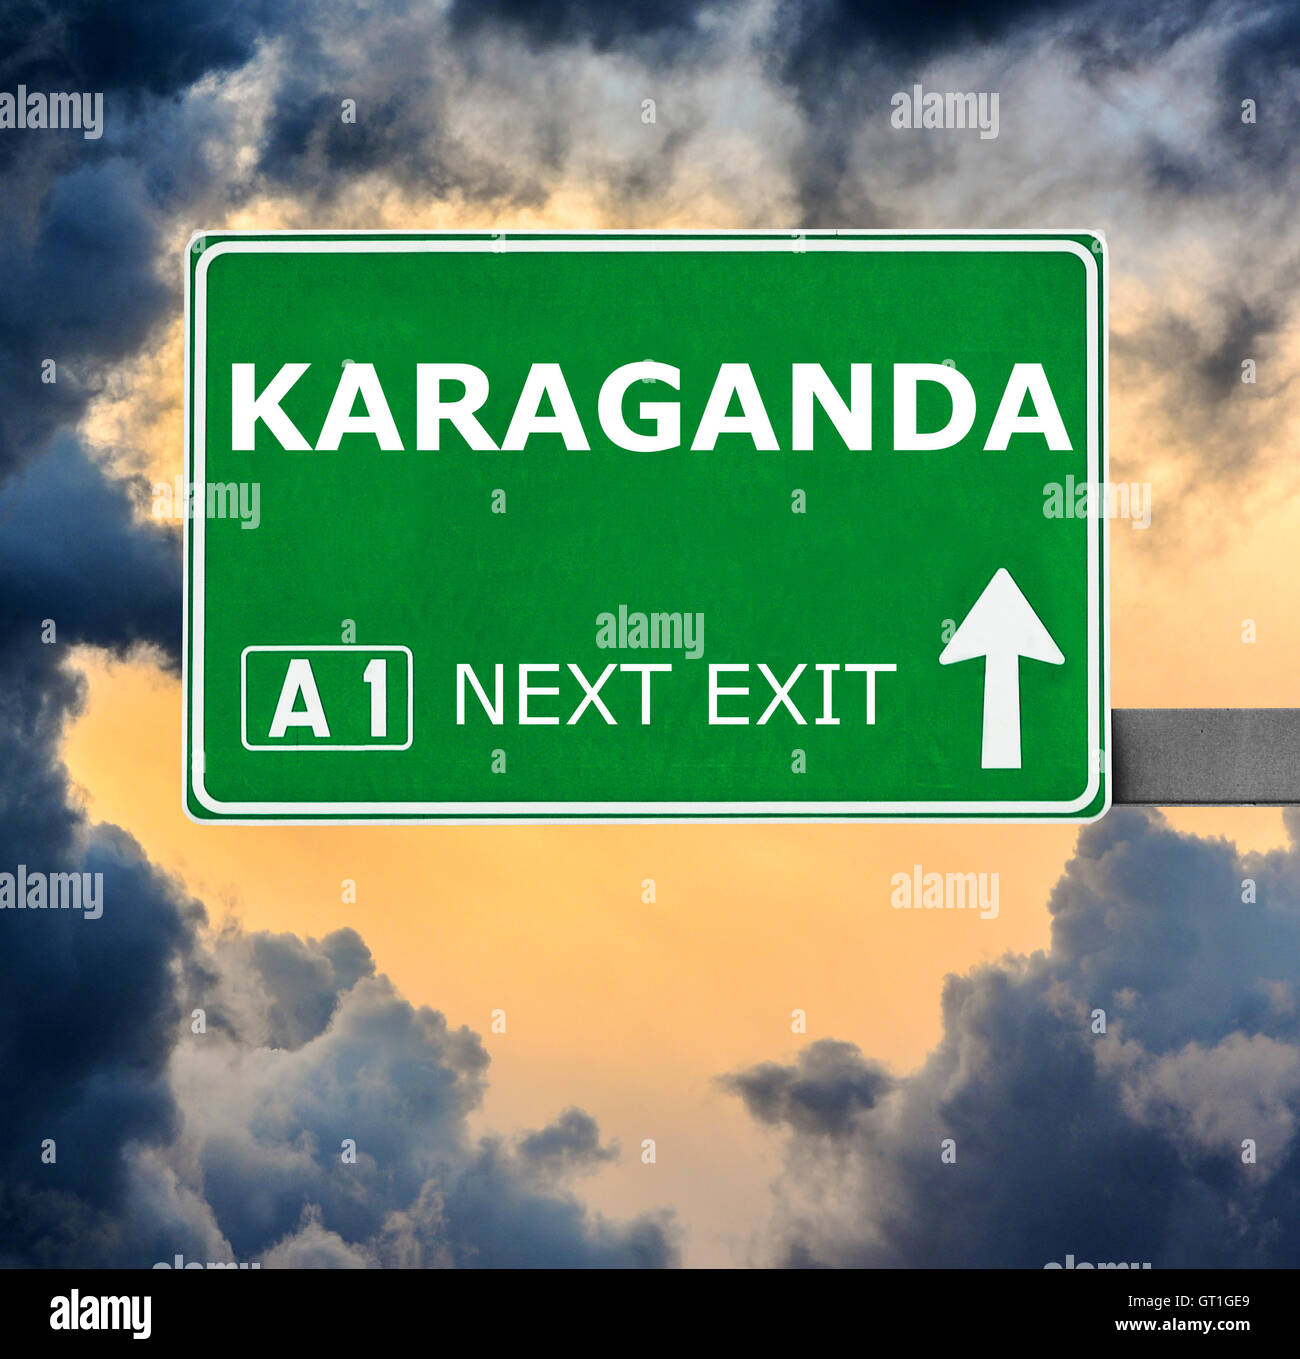 KARAGANDA road sign against clear blue sky Stock Photo